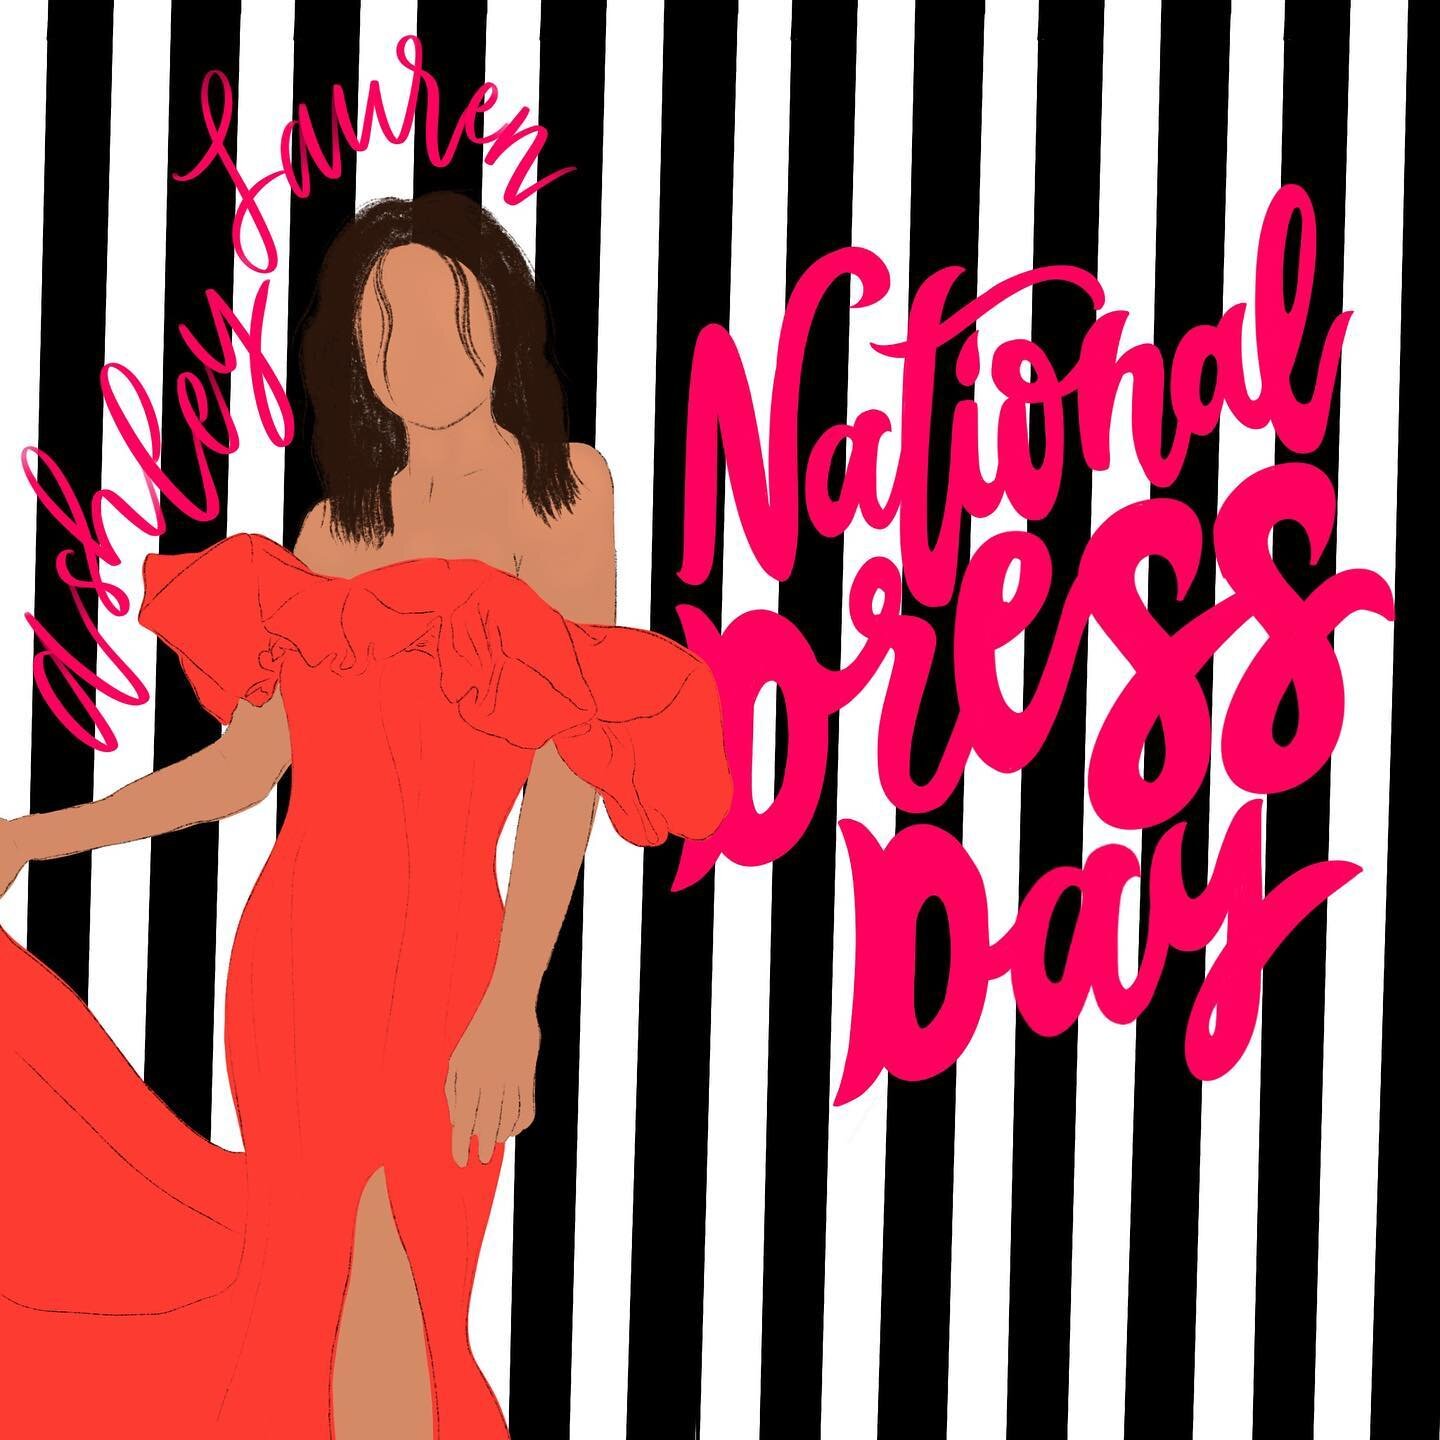 HAPPY NATIONAL DRESS DAY!!!! @ashleylauren 🎉🍾🥳 .
.
.
.
#ashleylauren #teamfabulous #pageant #nam #pageantdress #gown #ootd #namnationals #mrsecousa #missearthusa #nationalamericanmiss #mrsusaearth #missearth #covet  #beauty #photoshoot #stylist #m